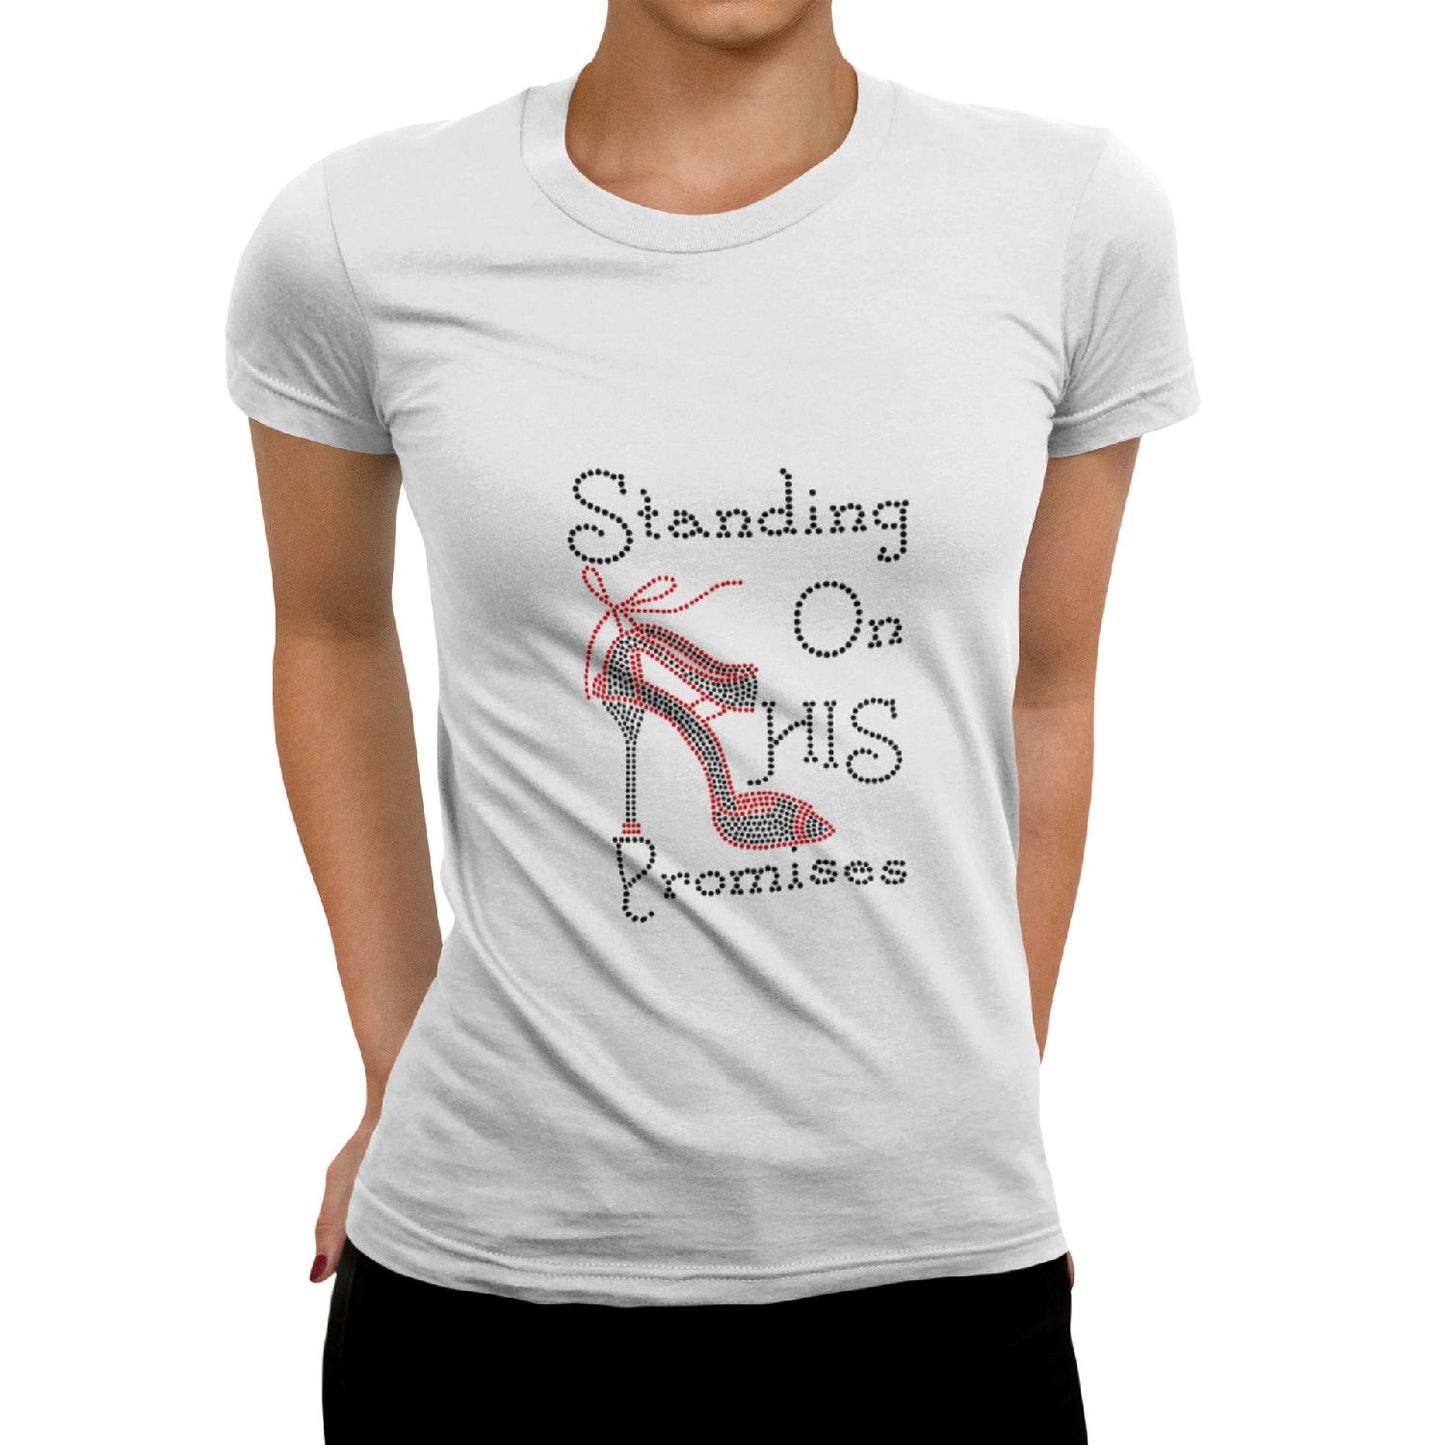 Standing On His Promises Rhinestone T-Shirt